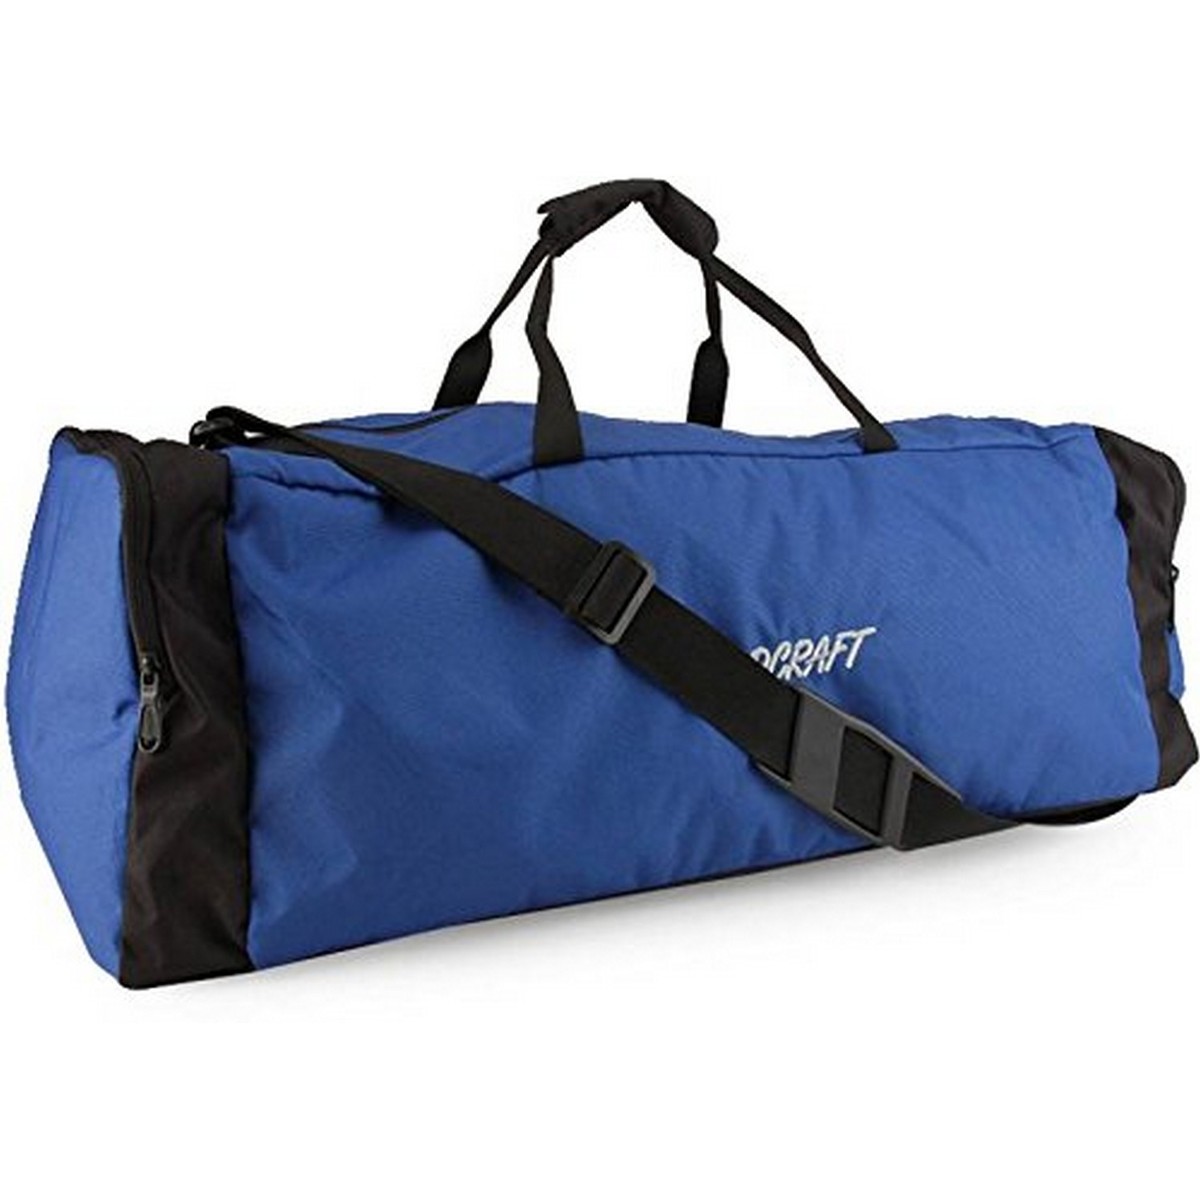 Wildcraft Power Duffle Bag 24inch Blue